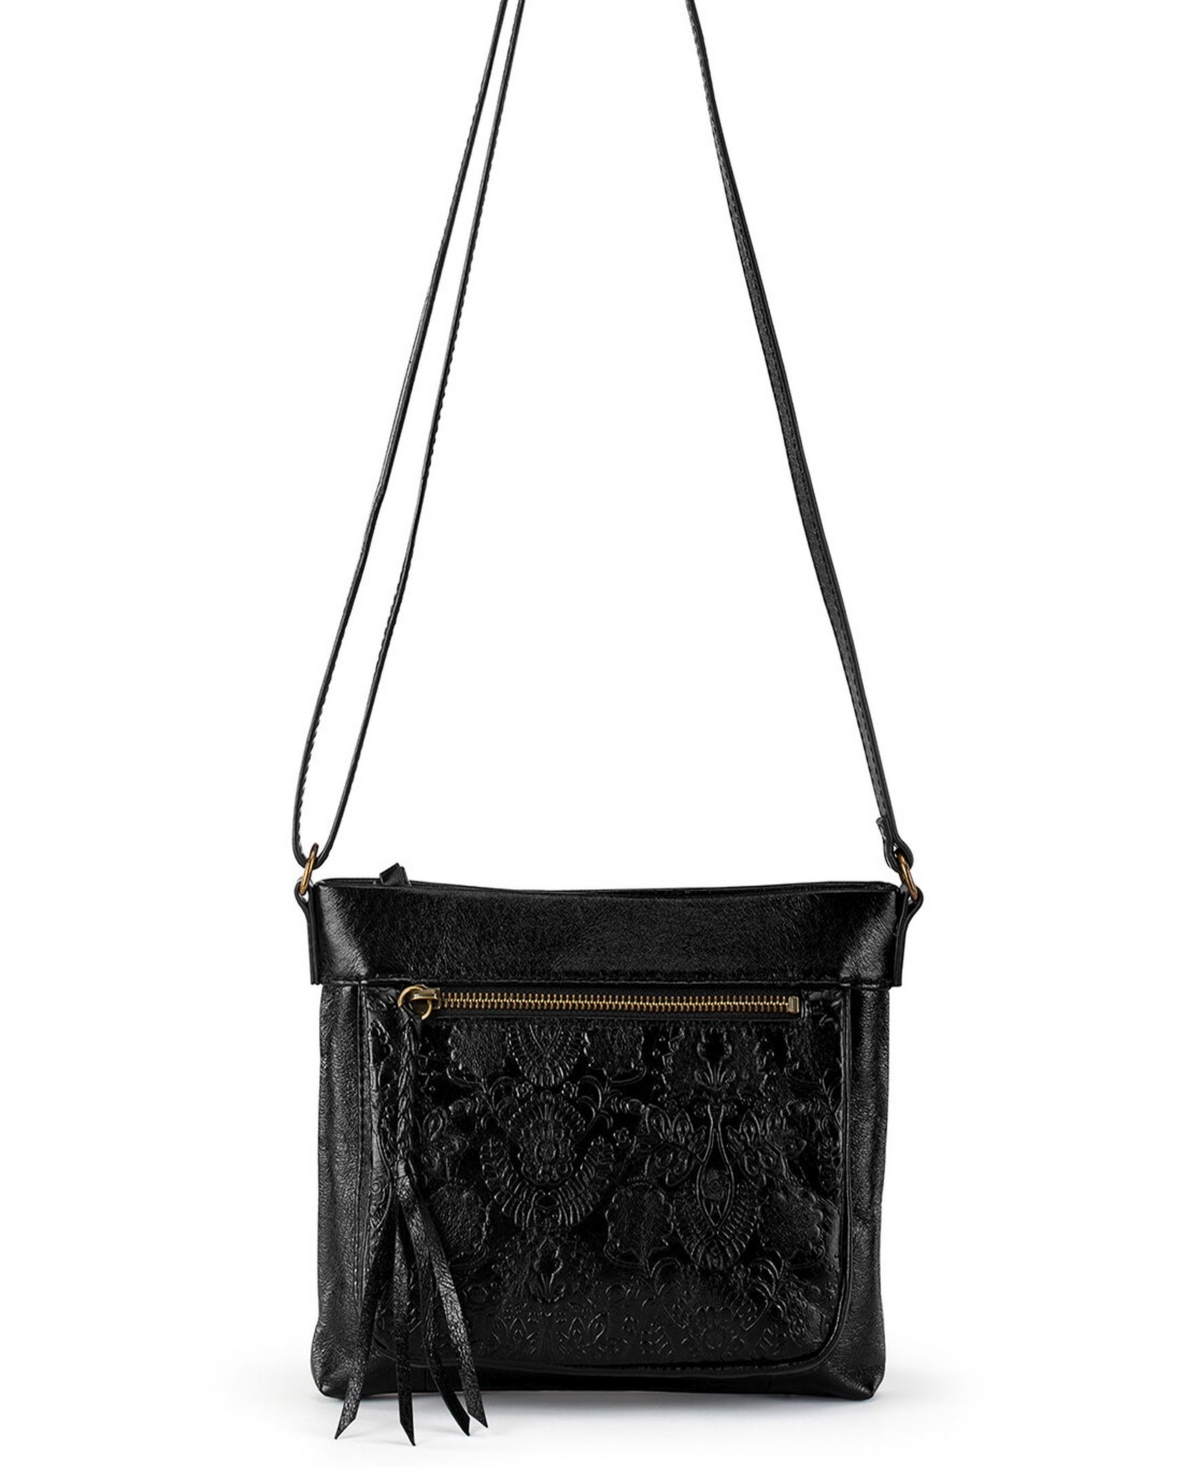 The Sak Women's Sanibel Leather Crossbody In Black Floral Emboss